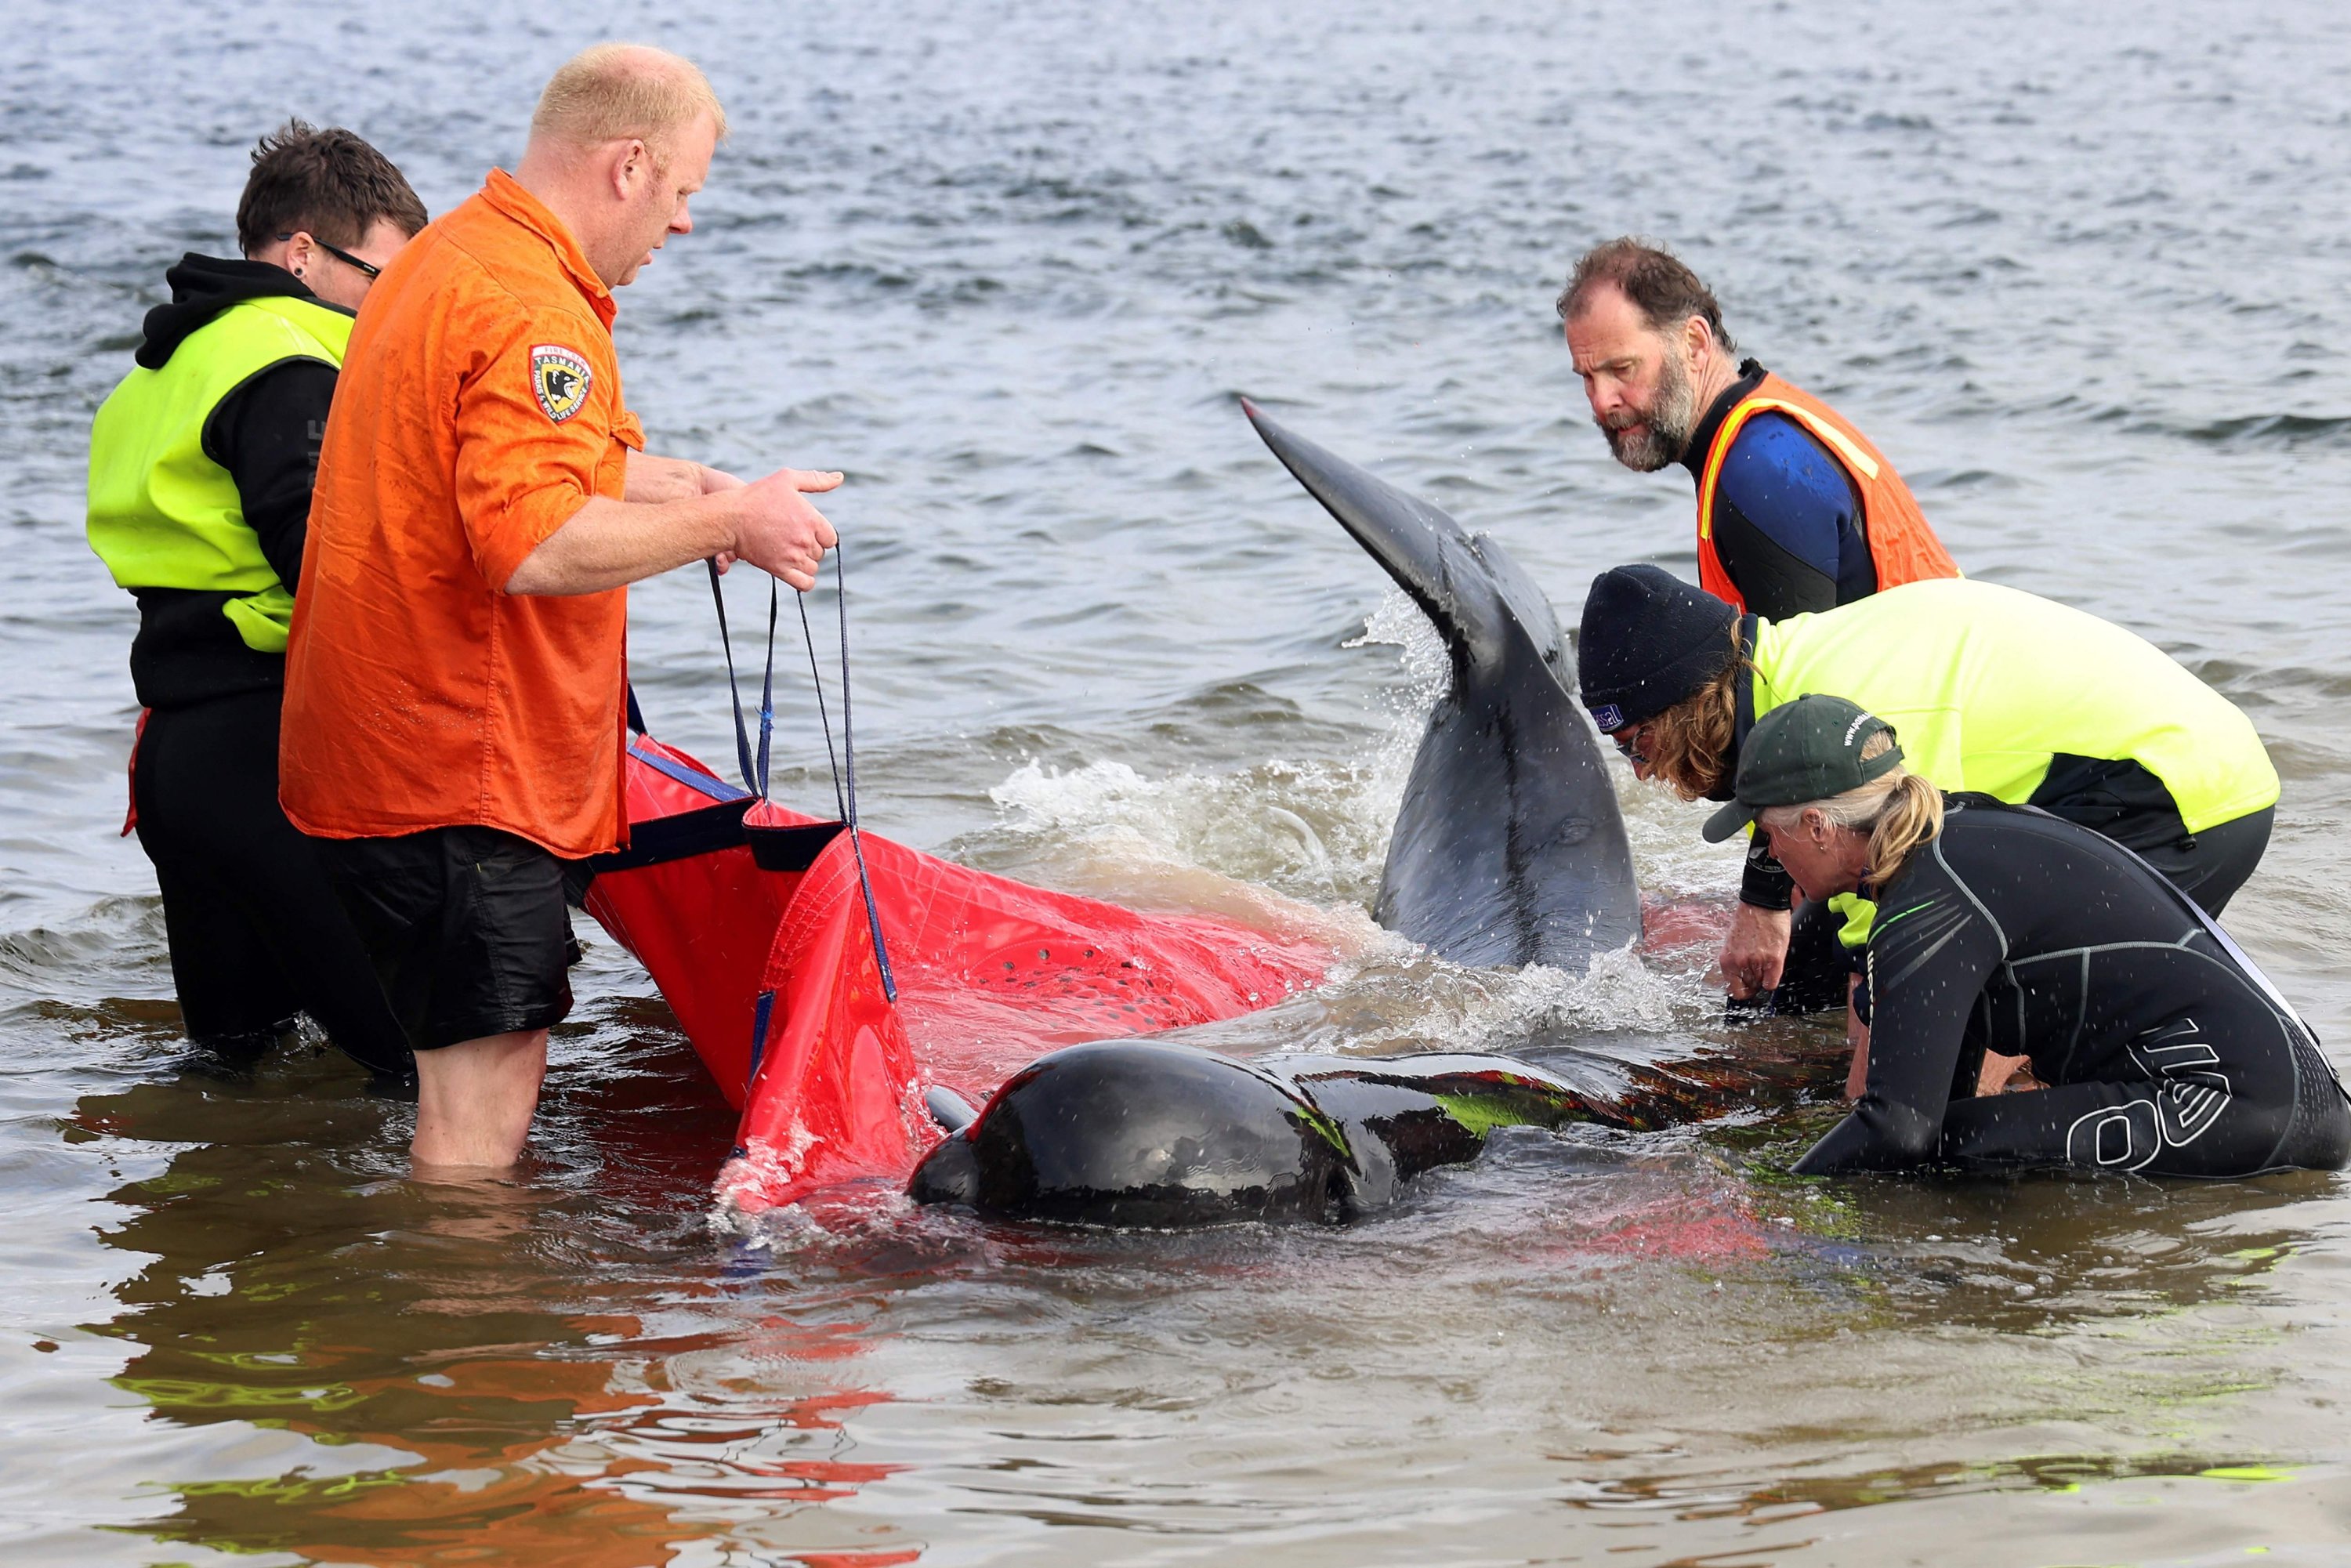 Tasmania whale stranding: 200 whales dead, 35 remain alive